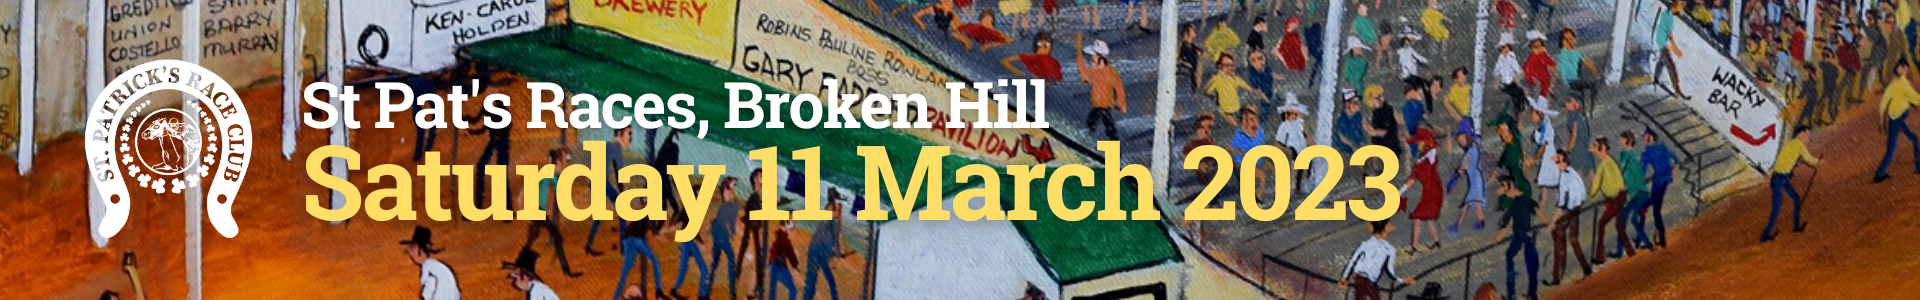 St Pat's Races, Broken Hill Saturday 11 March 2023